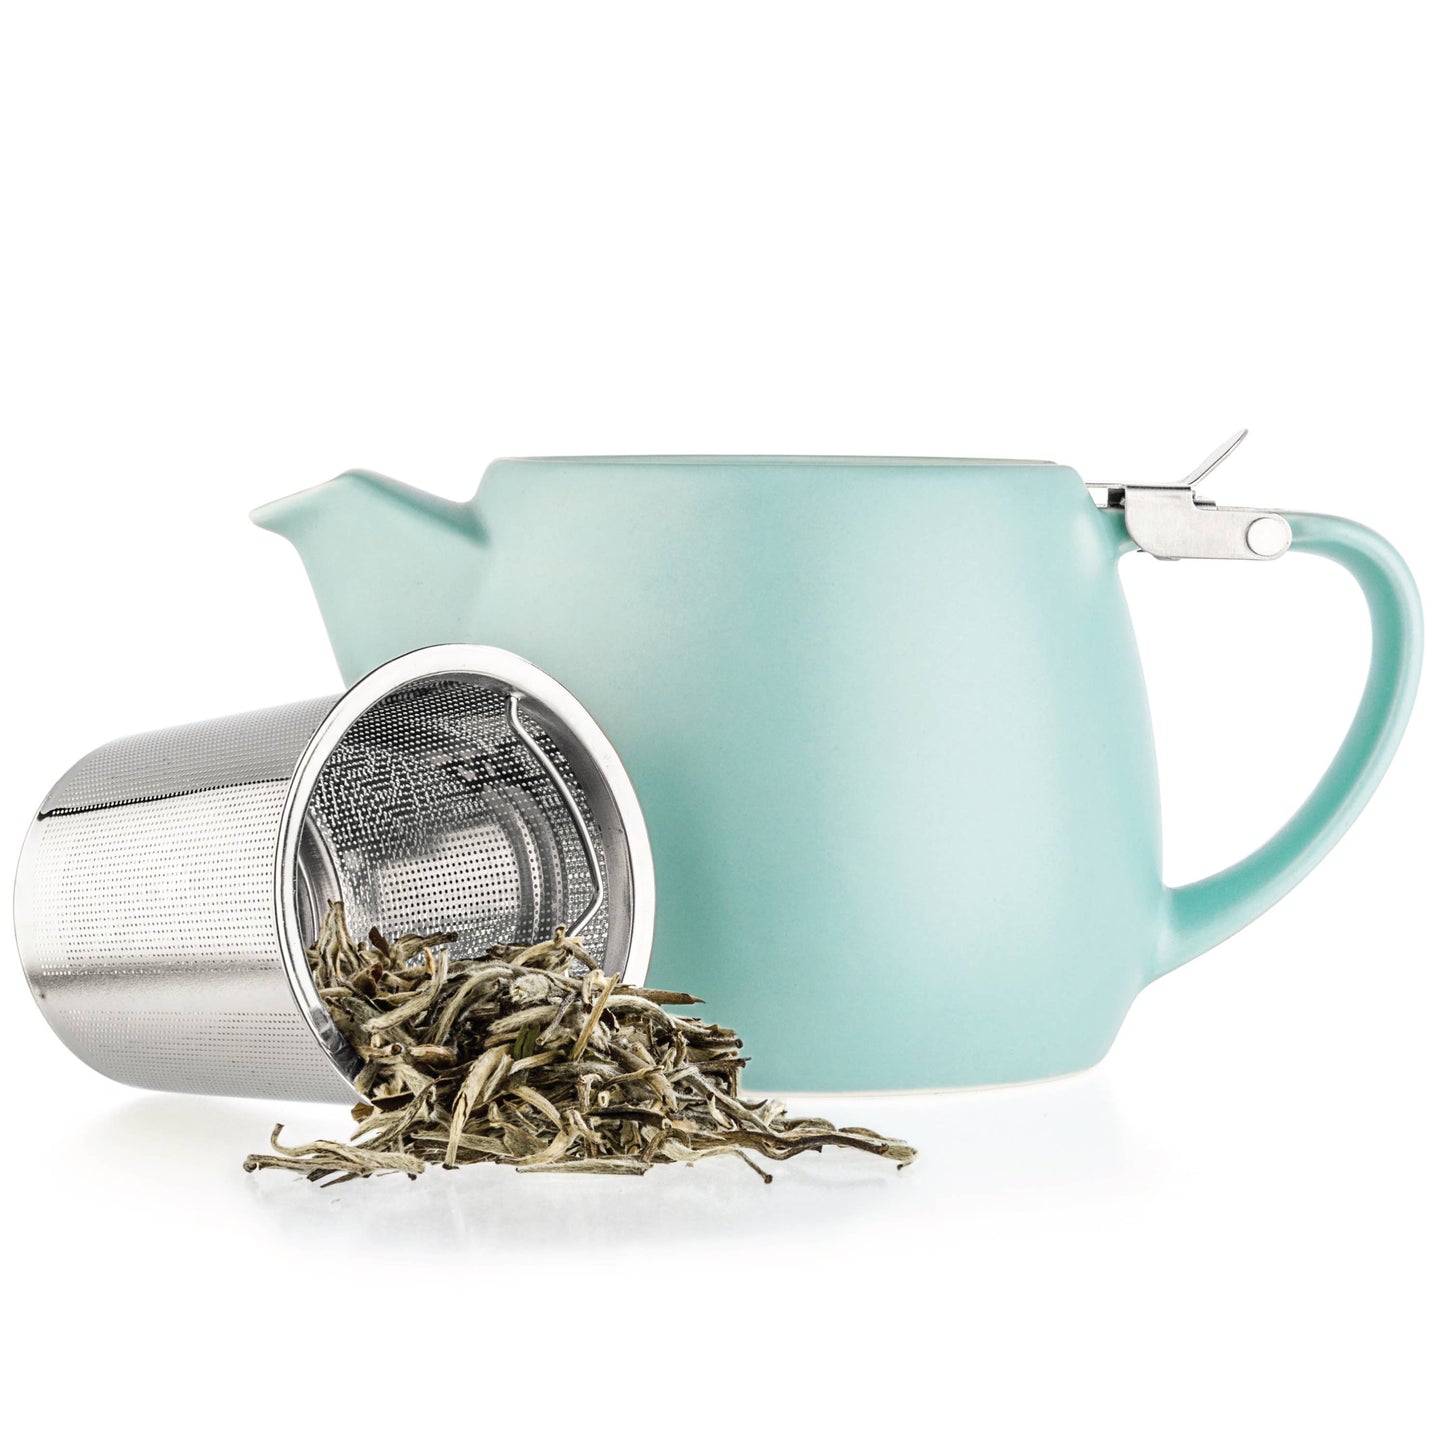 Turquoise Porcelain Teapot 18.2oz